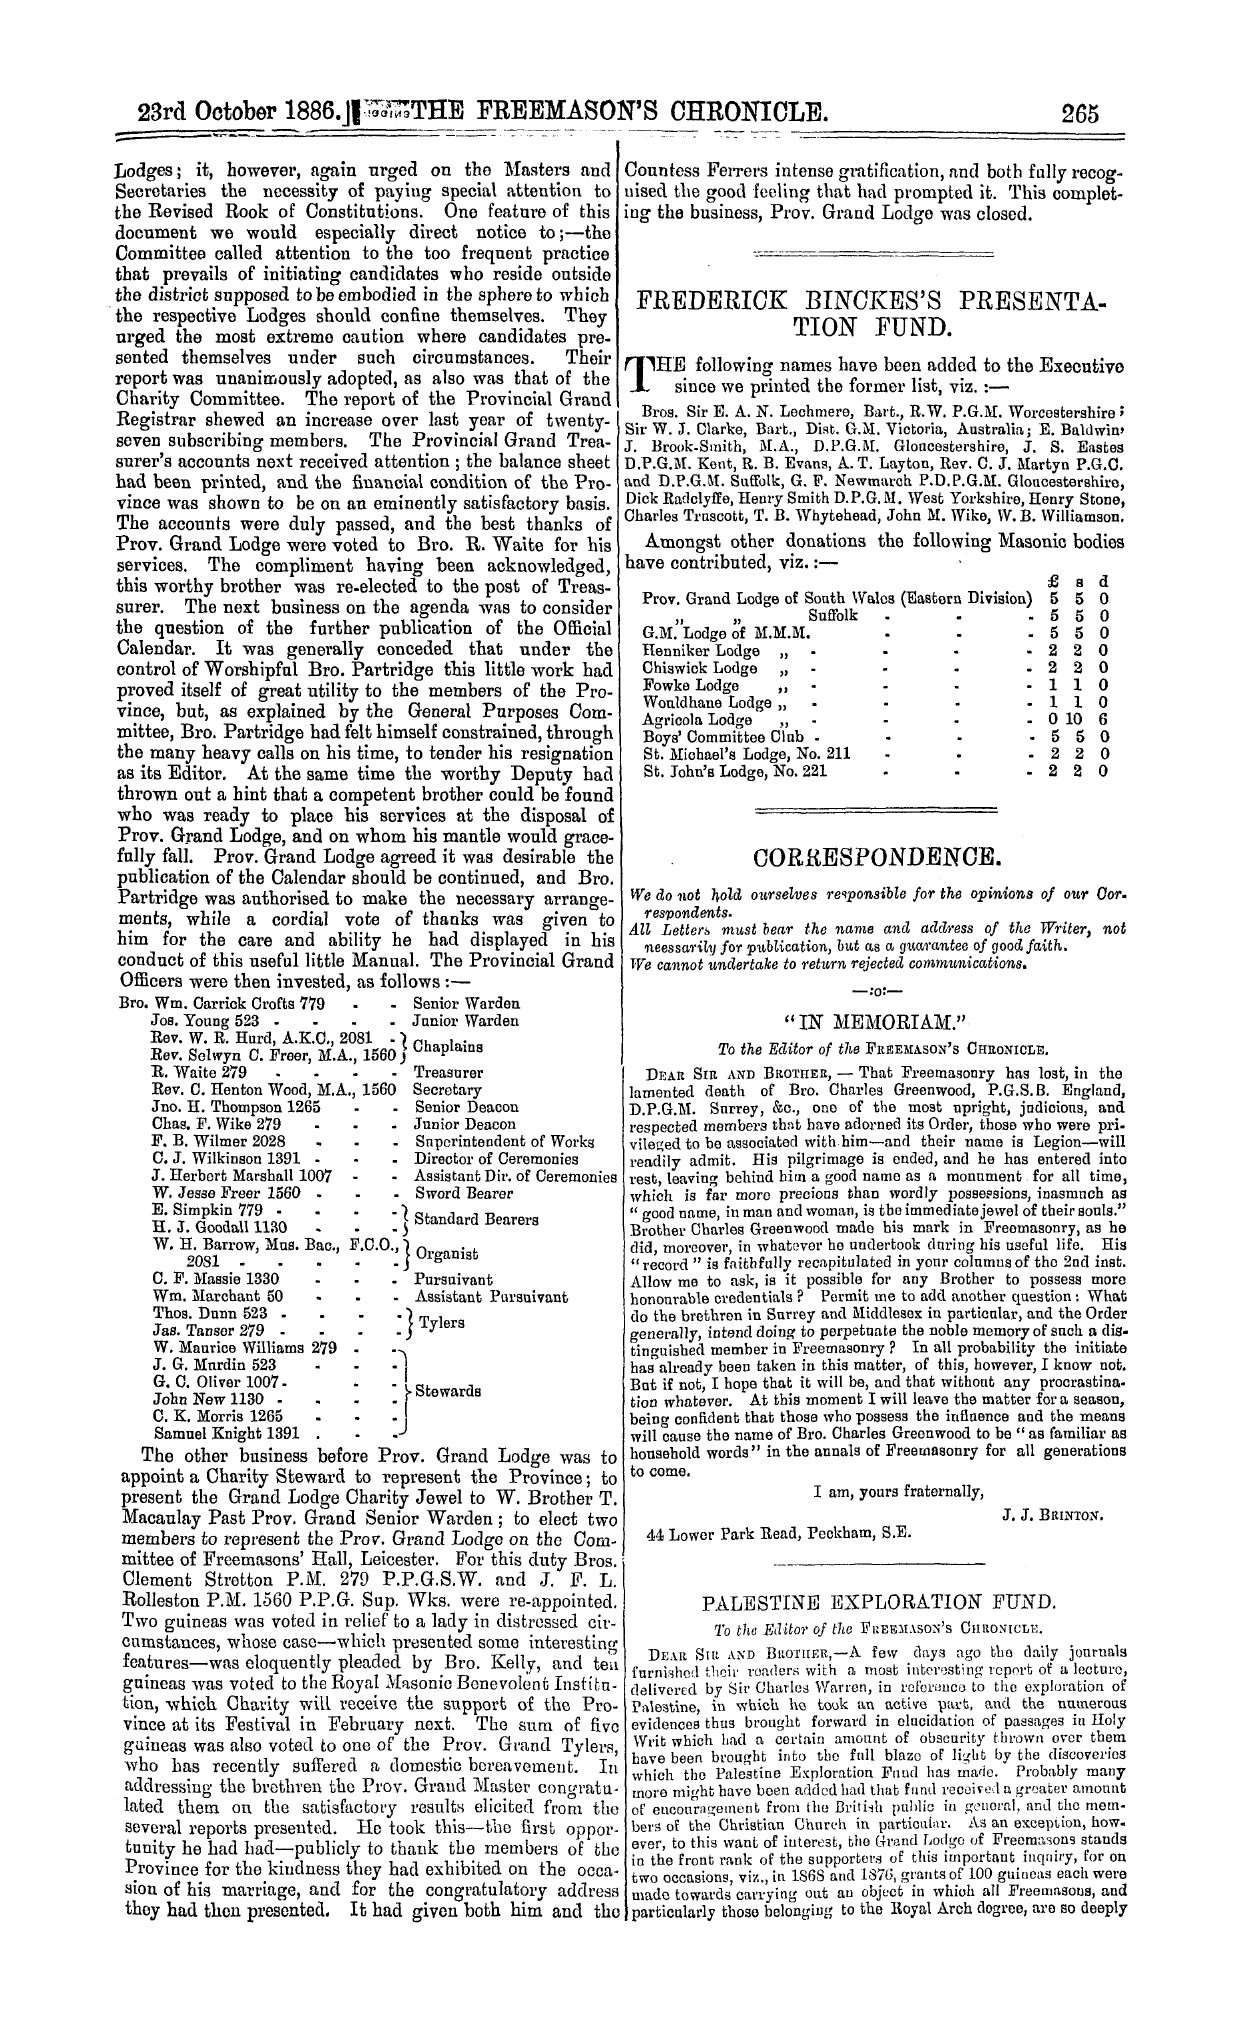 The Freemason's Chronicle: 1886-10-23 - Frederick Binckes's Presentation Fund.